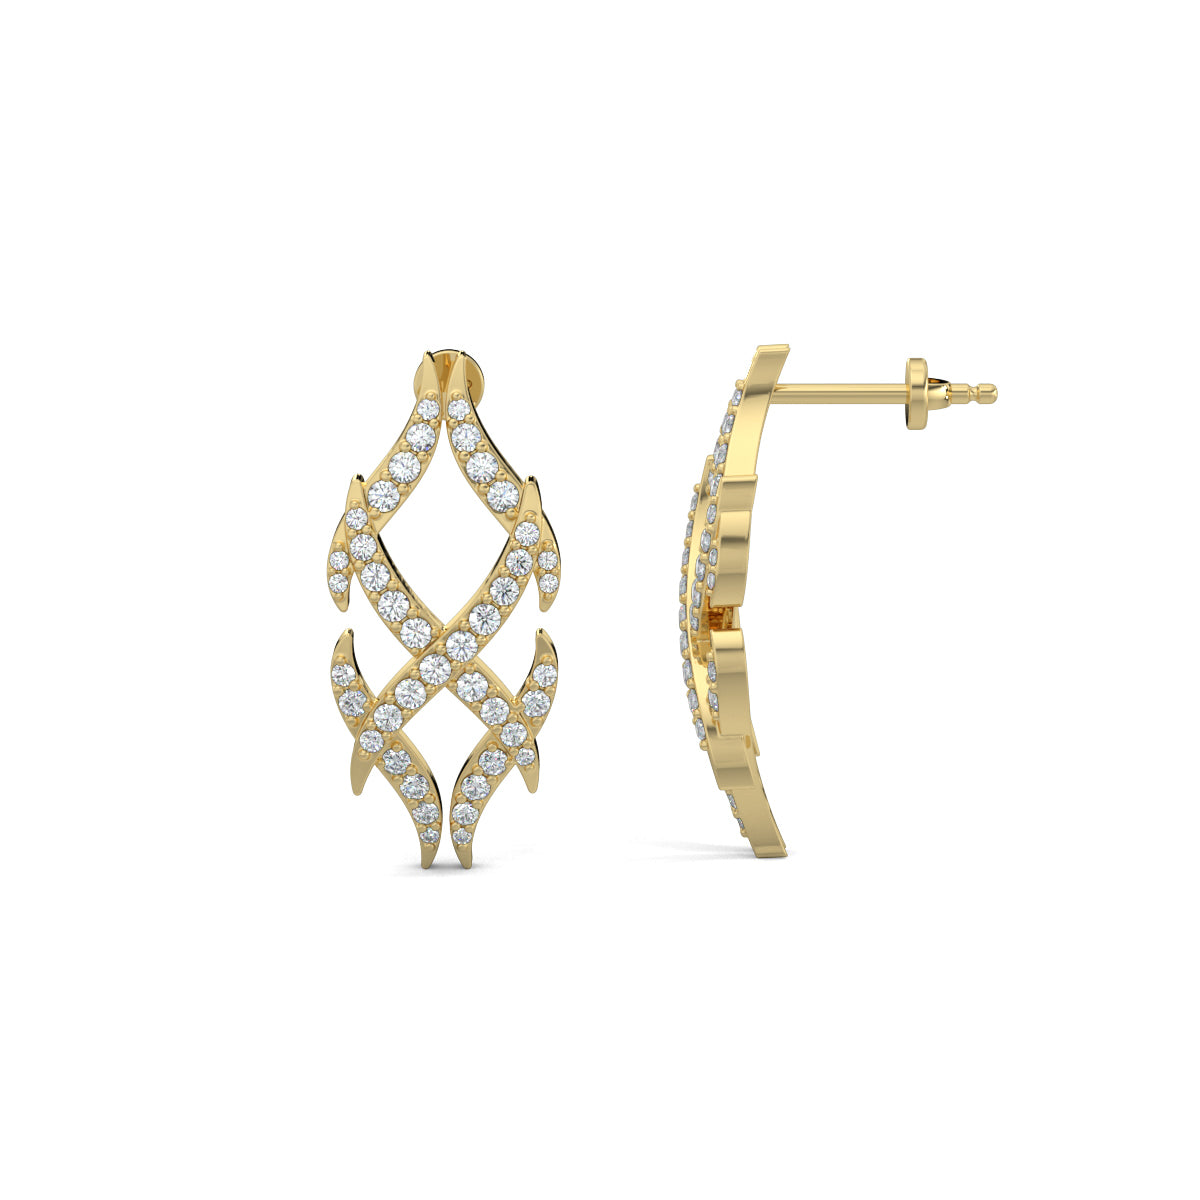 Yellow Gold, Diamond Earrings, Italian-inspired diamond earrings, mid-length earrings, natural diamonds, lab-grown diamonds, Bella Luce Earrings, elegant jewelry, sophisticated earrings, Italian design inspired earrings.